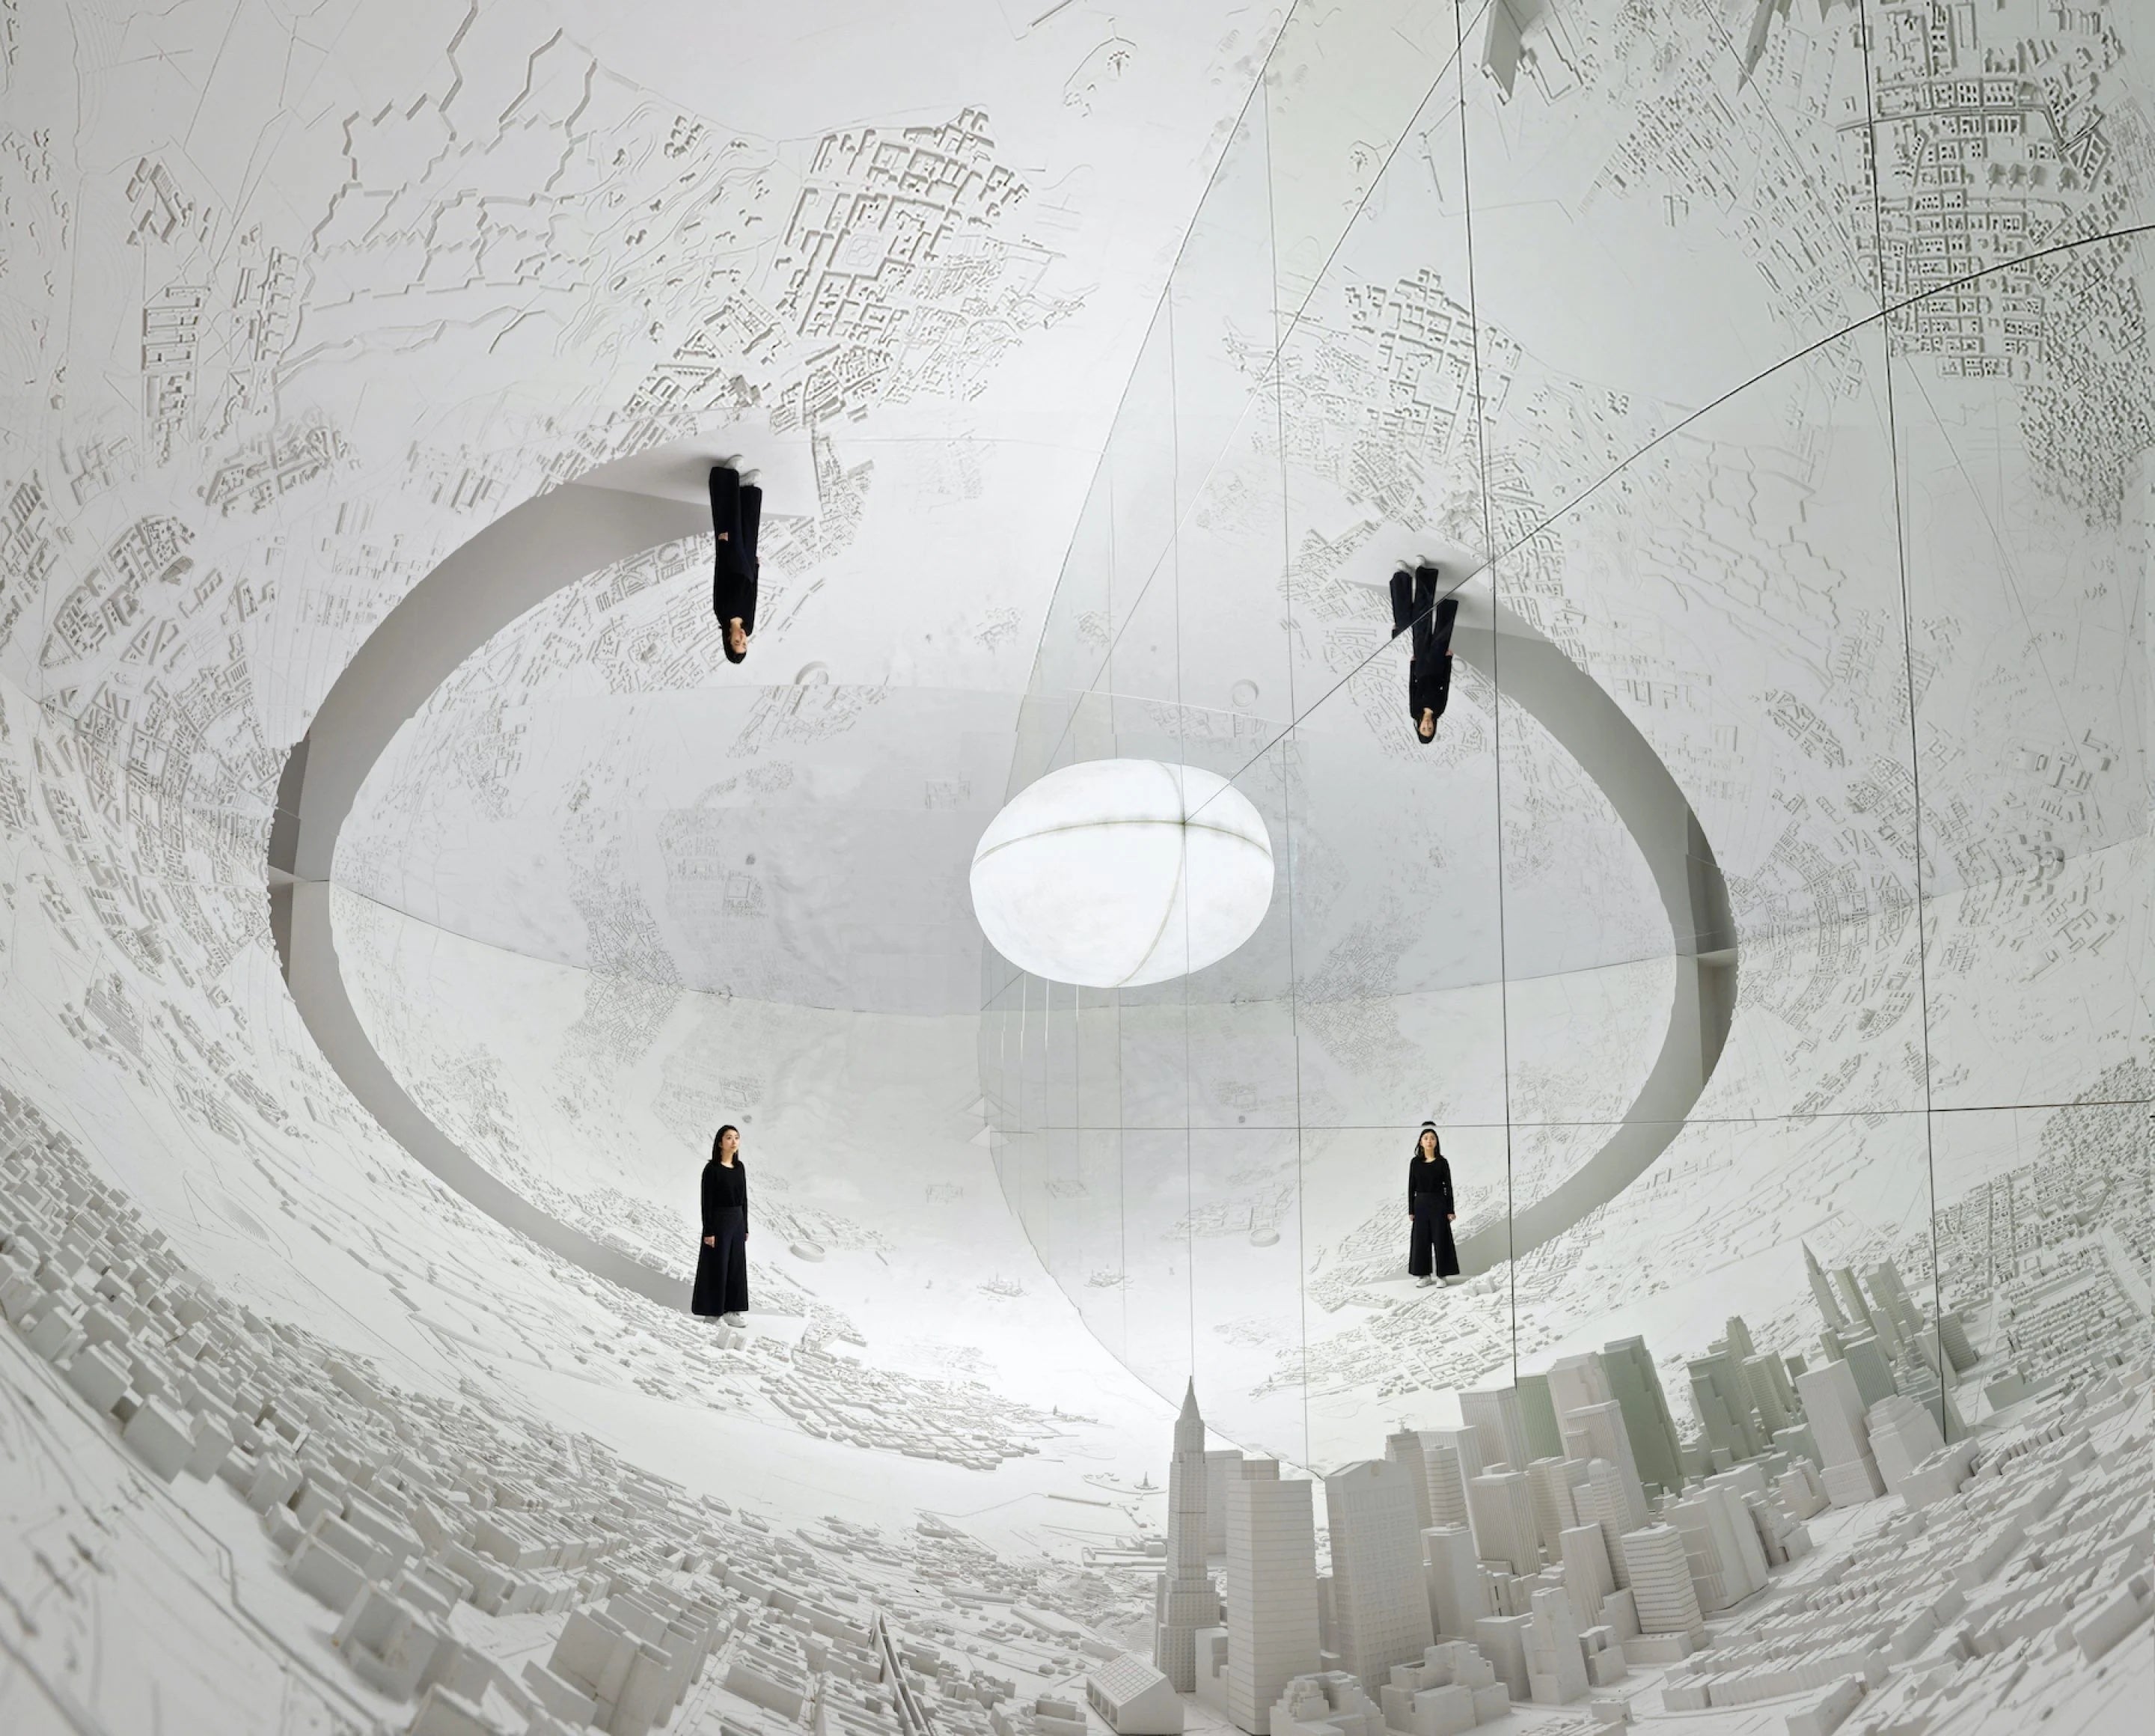 The Crucible set design by Es Devlin features cyclical rain installation